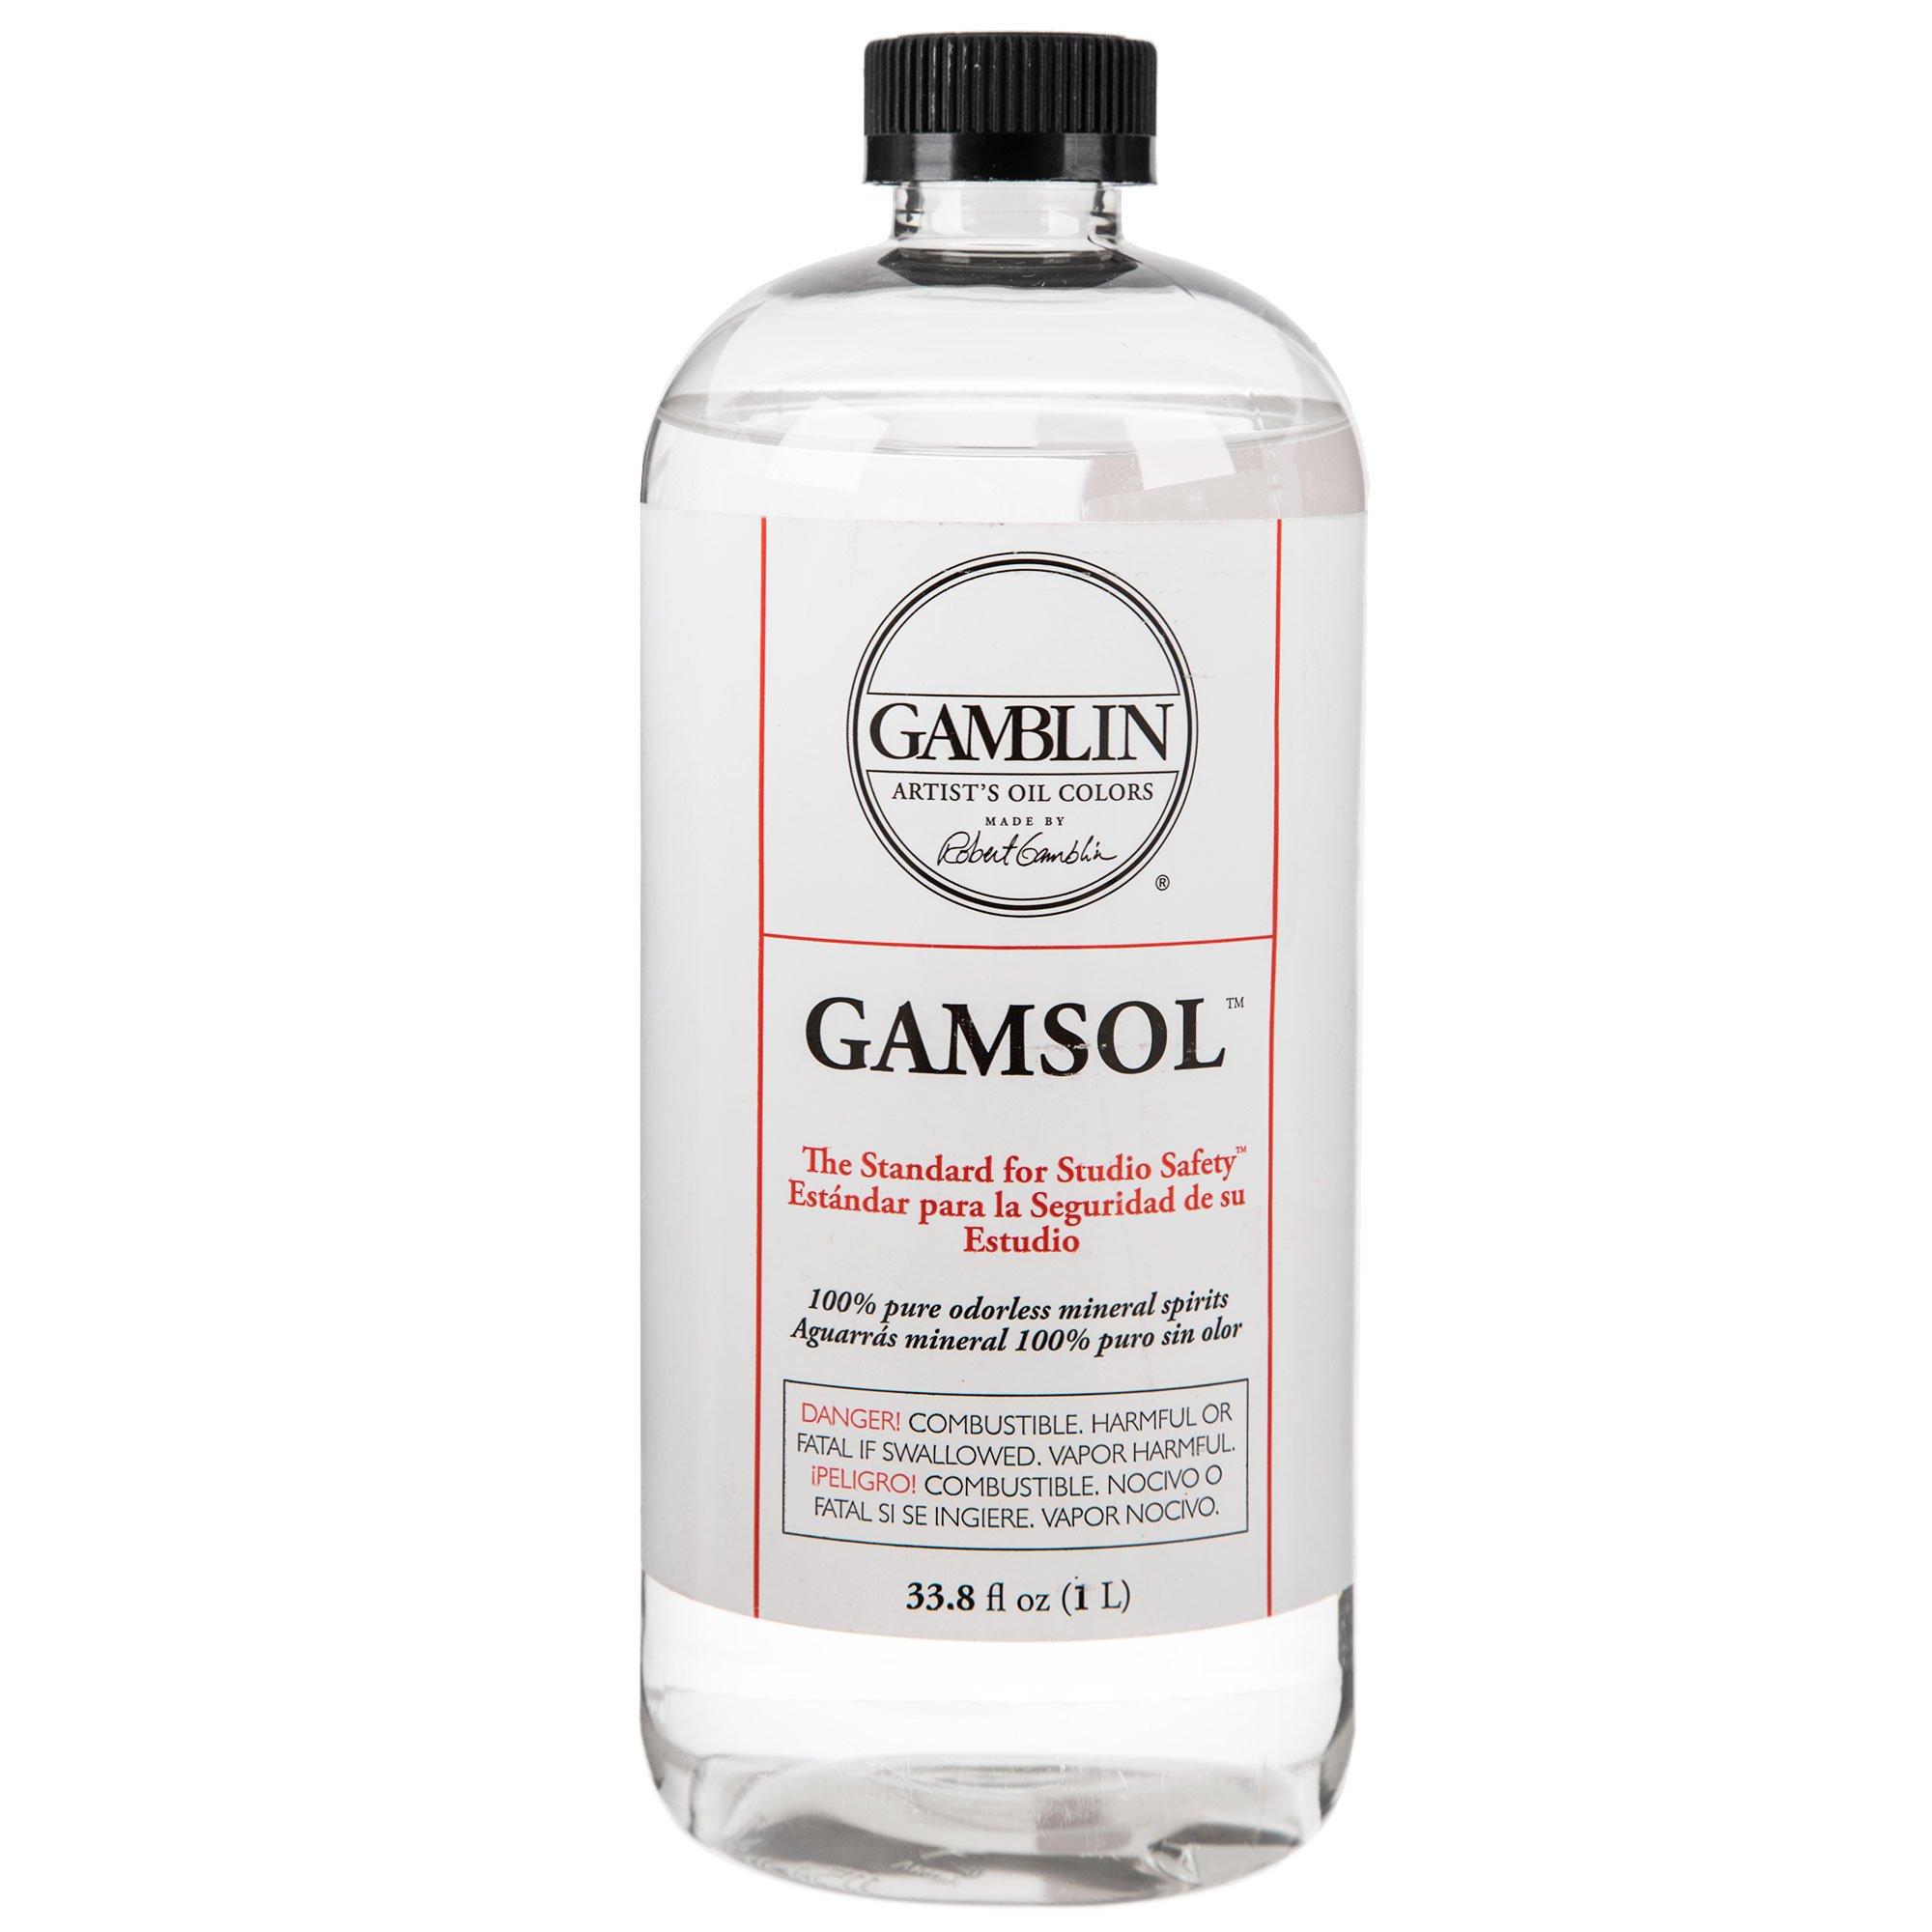 Gamblin G00094 GAMSOL - OMS 4oz